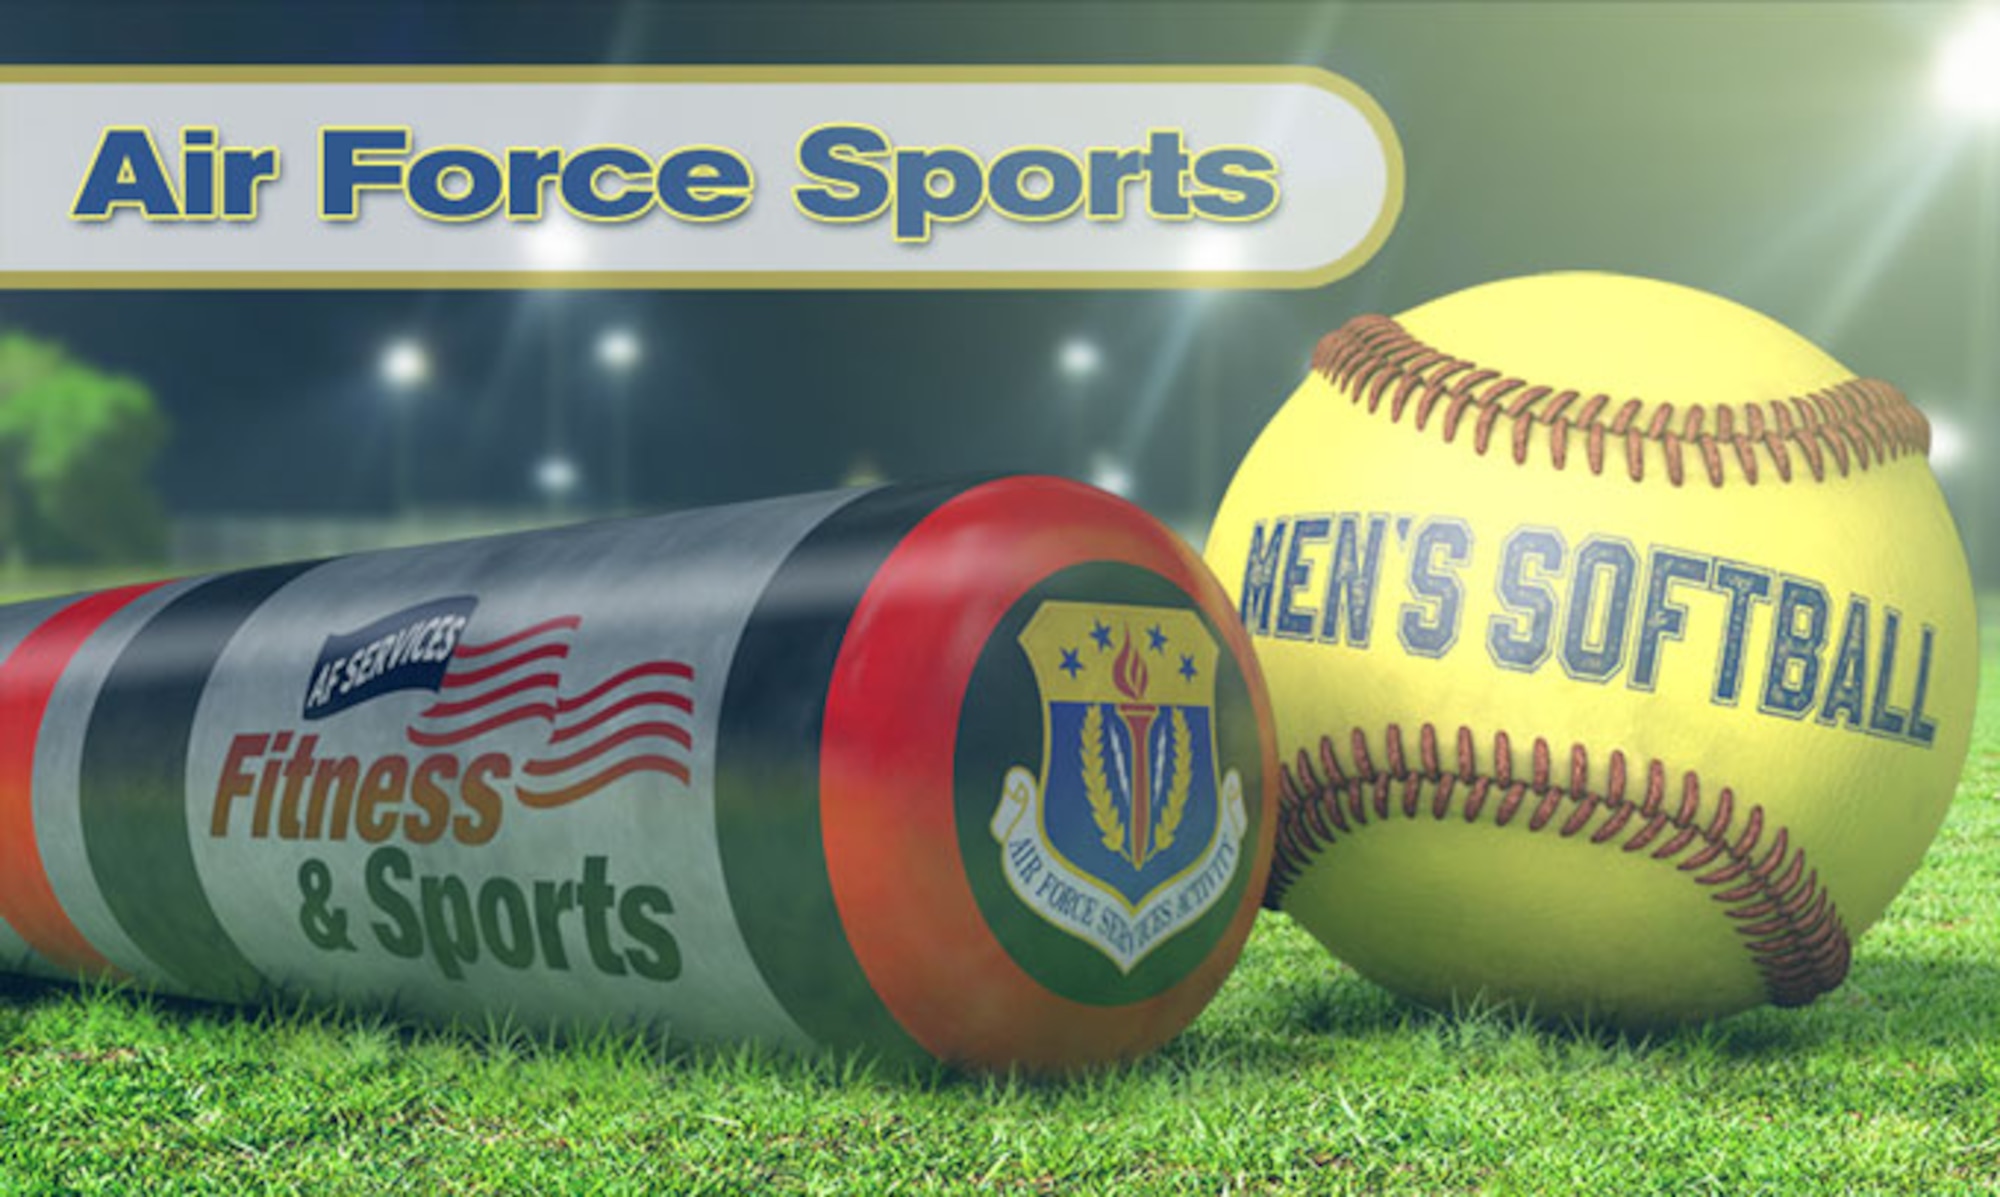 Air Force Sports Men's Softball